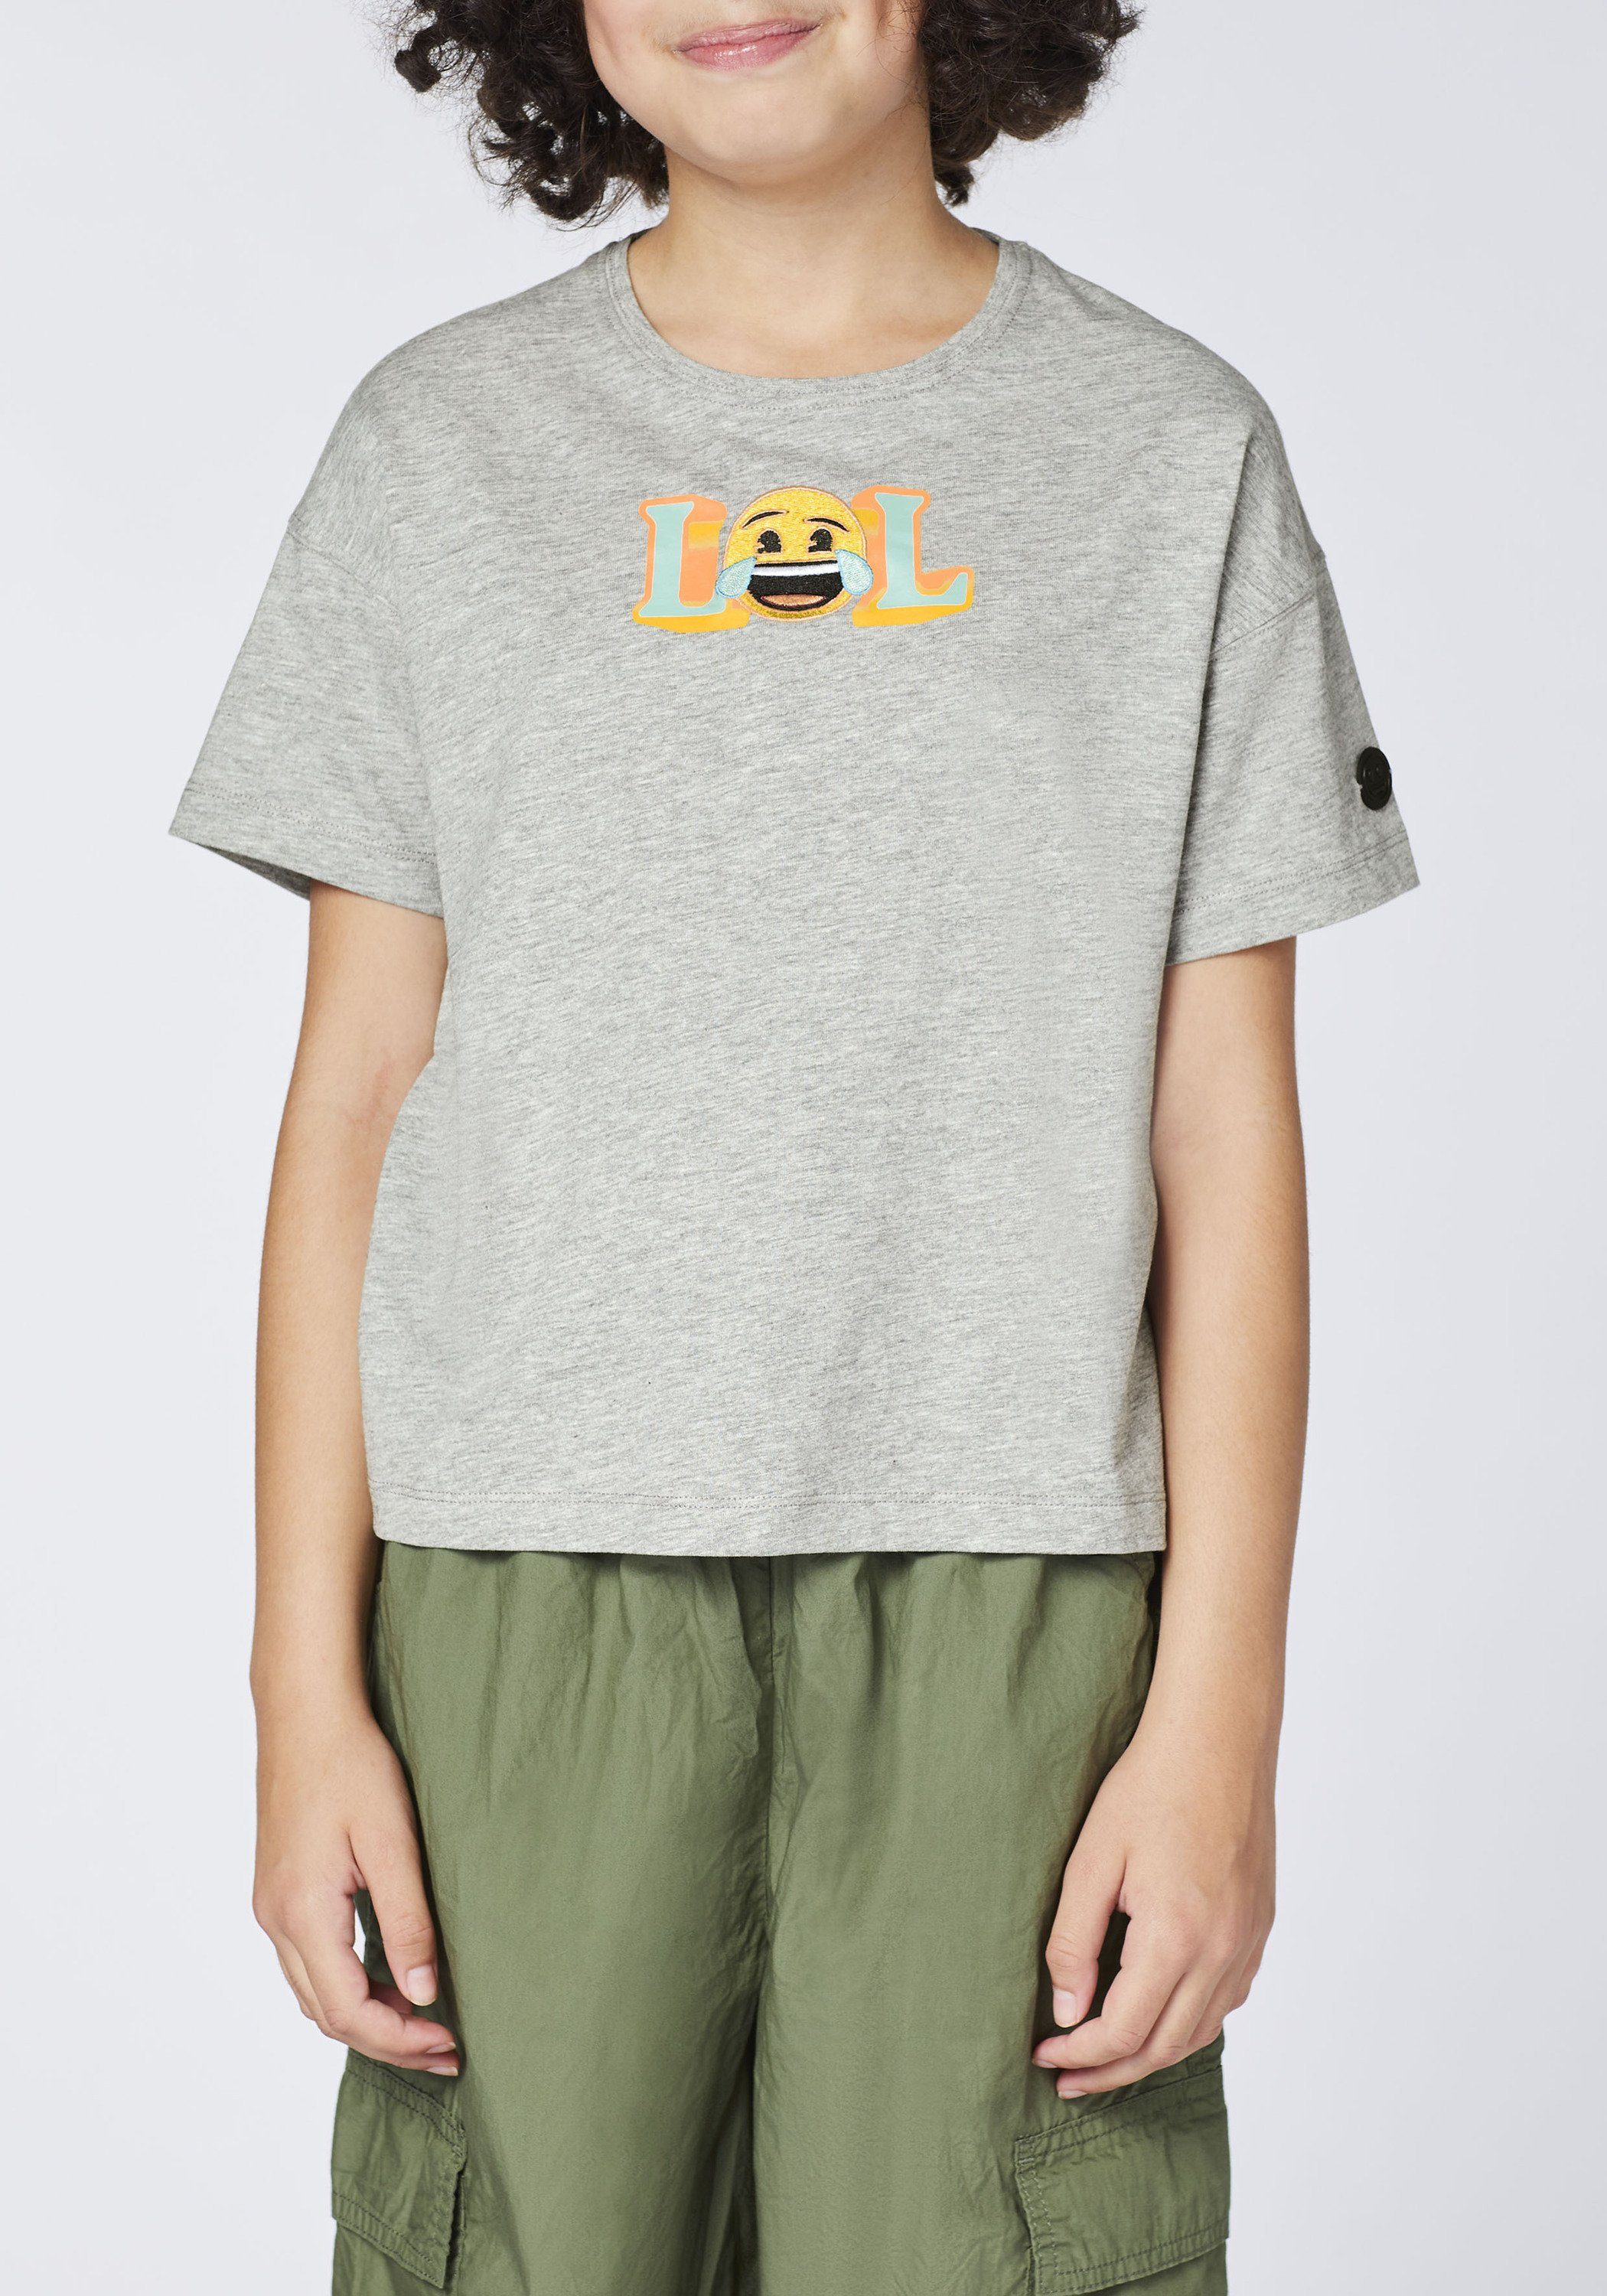 Emoji Print-Shirt im LOL-Design